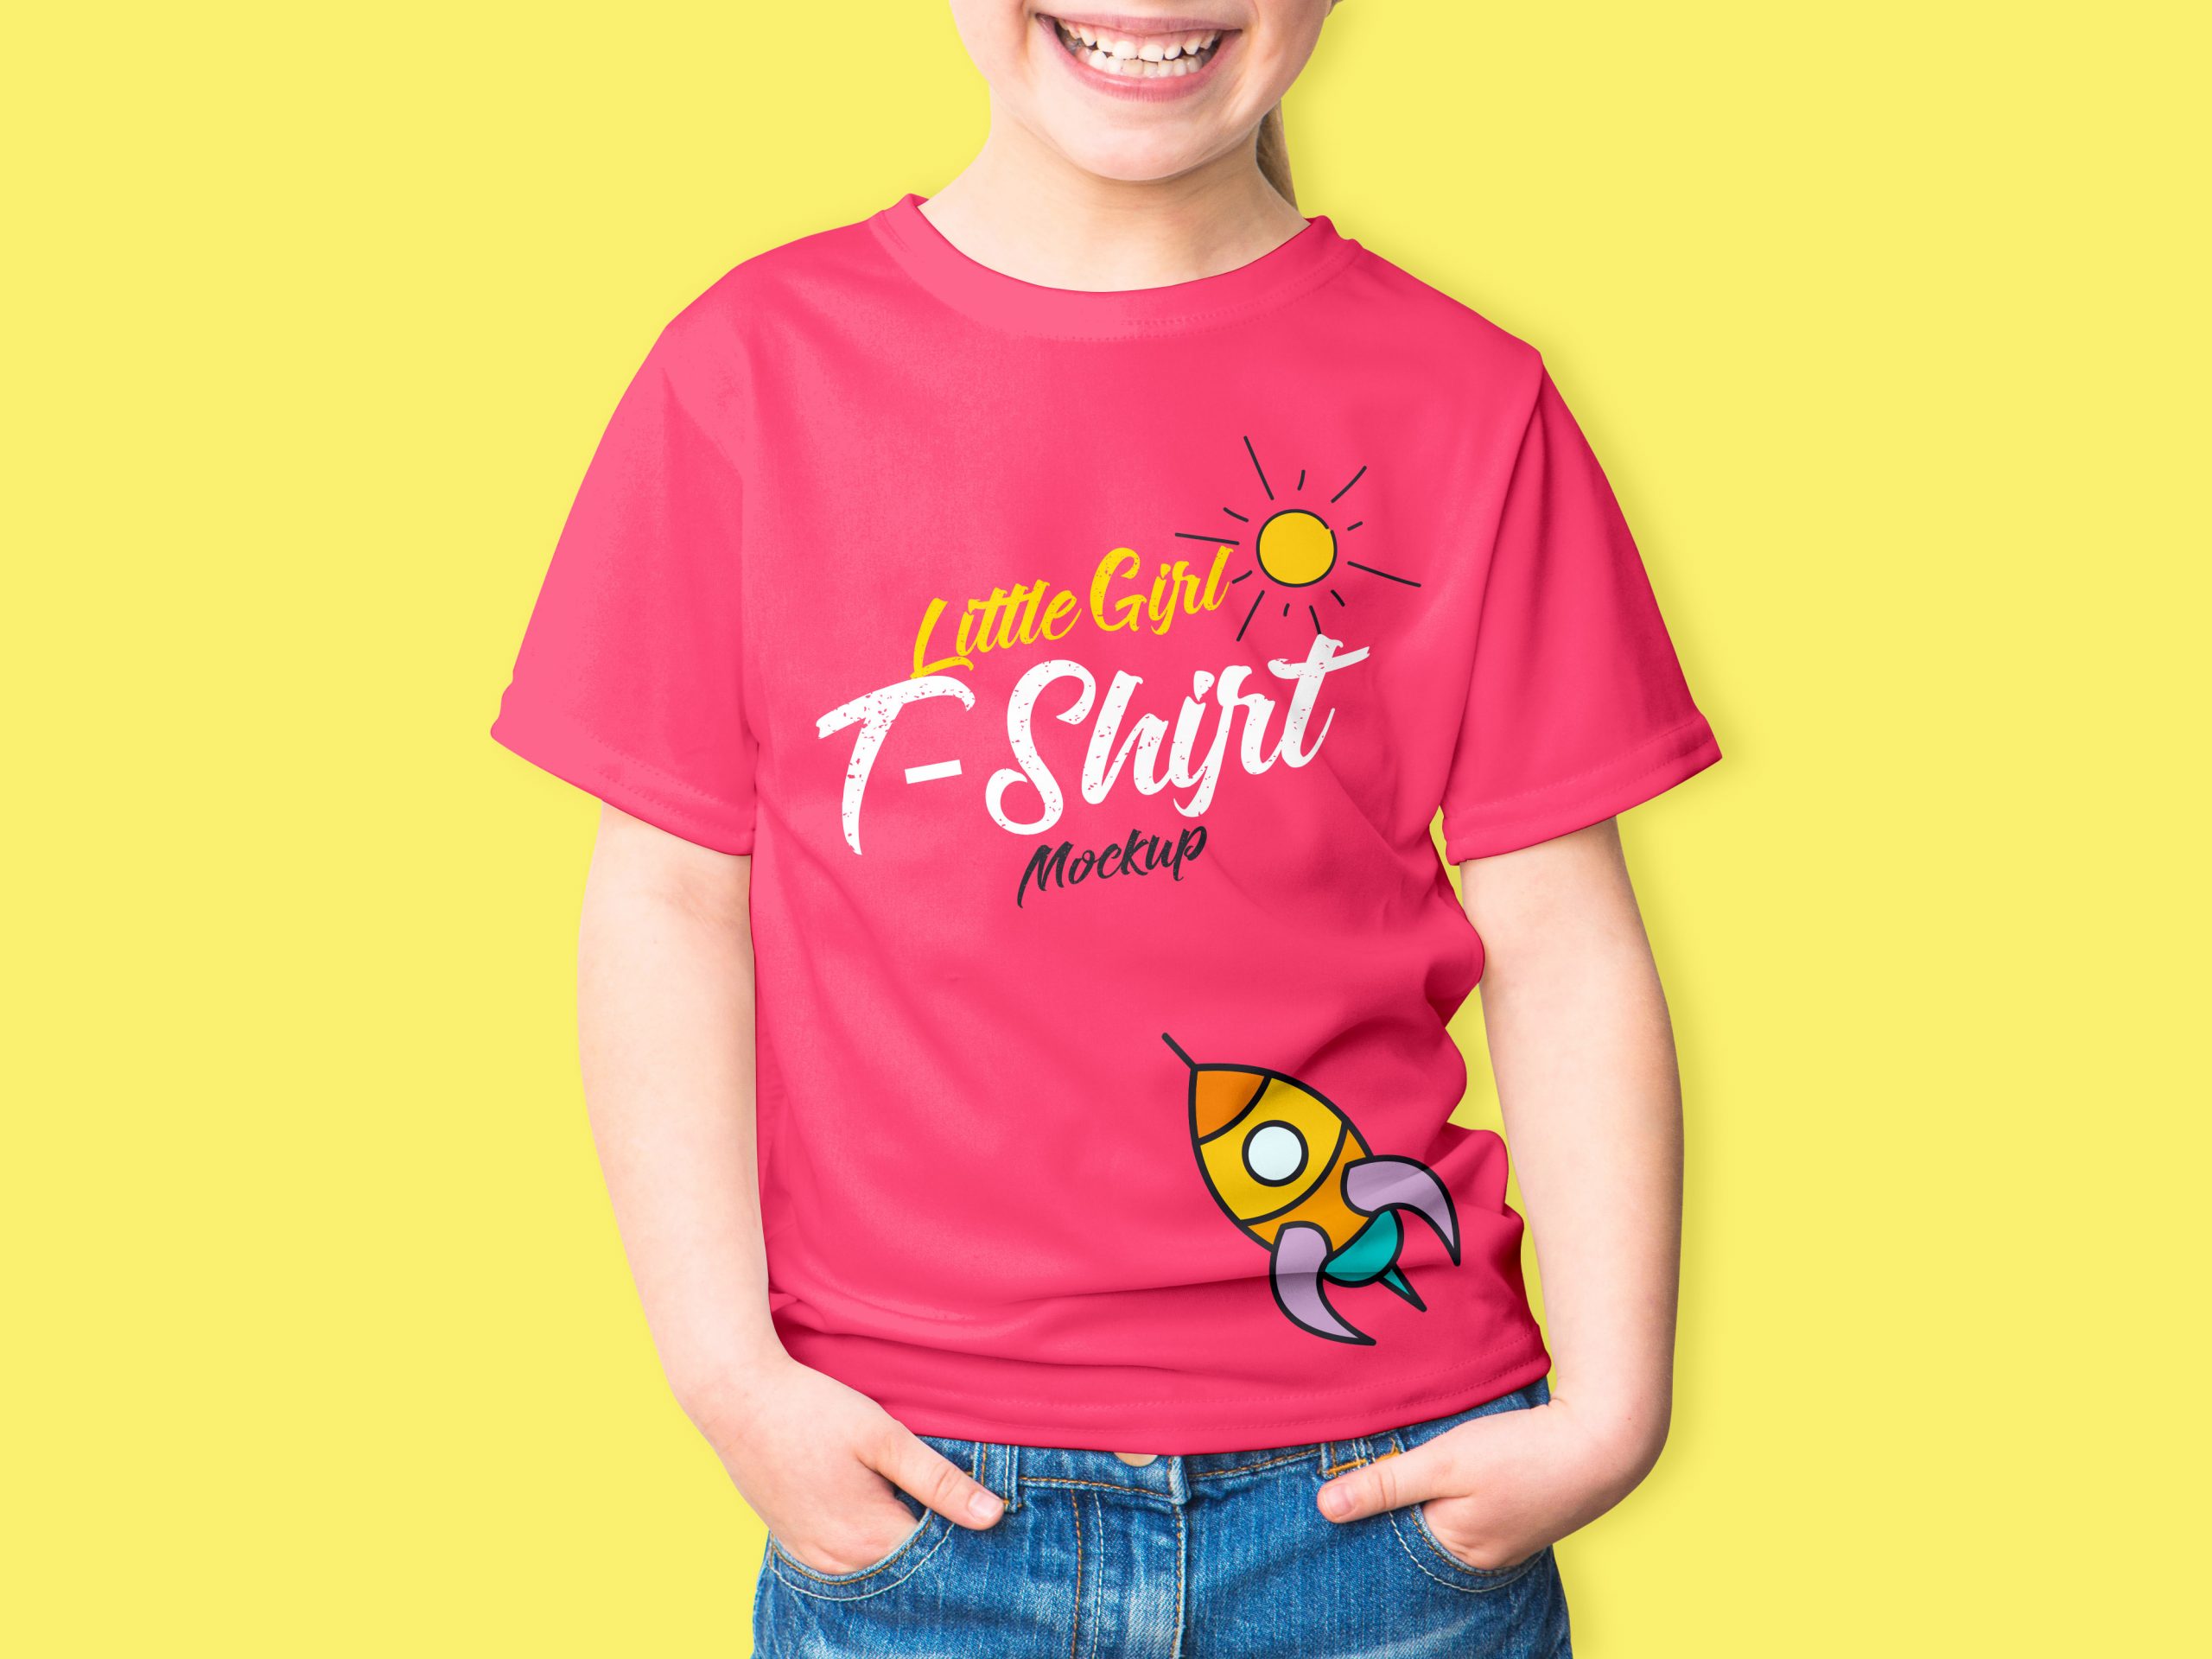 Little Girl T-Shirt Mockup PSD 2021